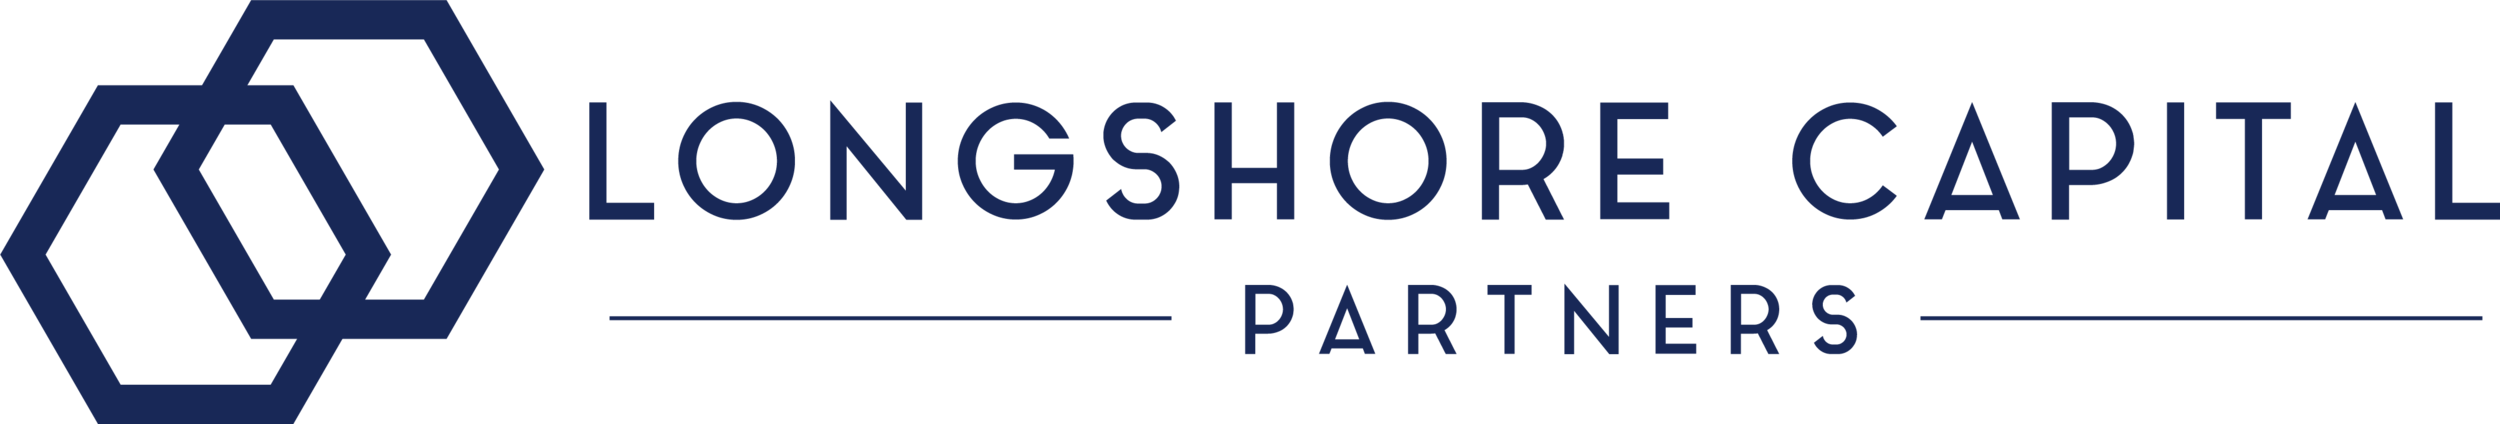 Longshore logo.png